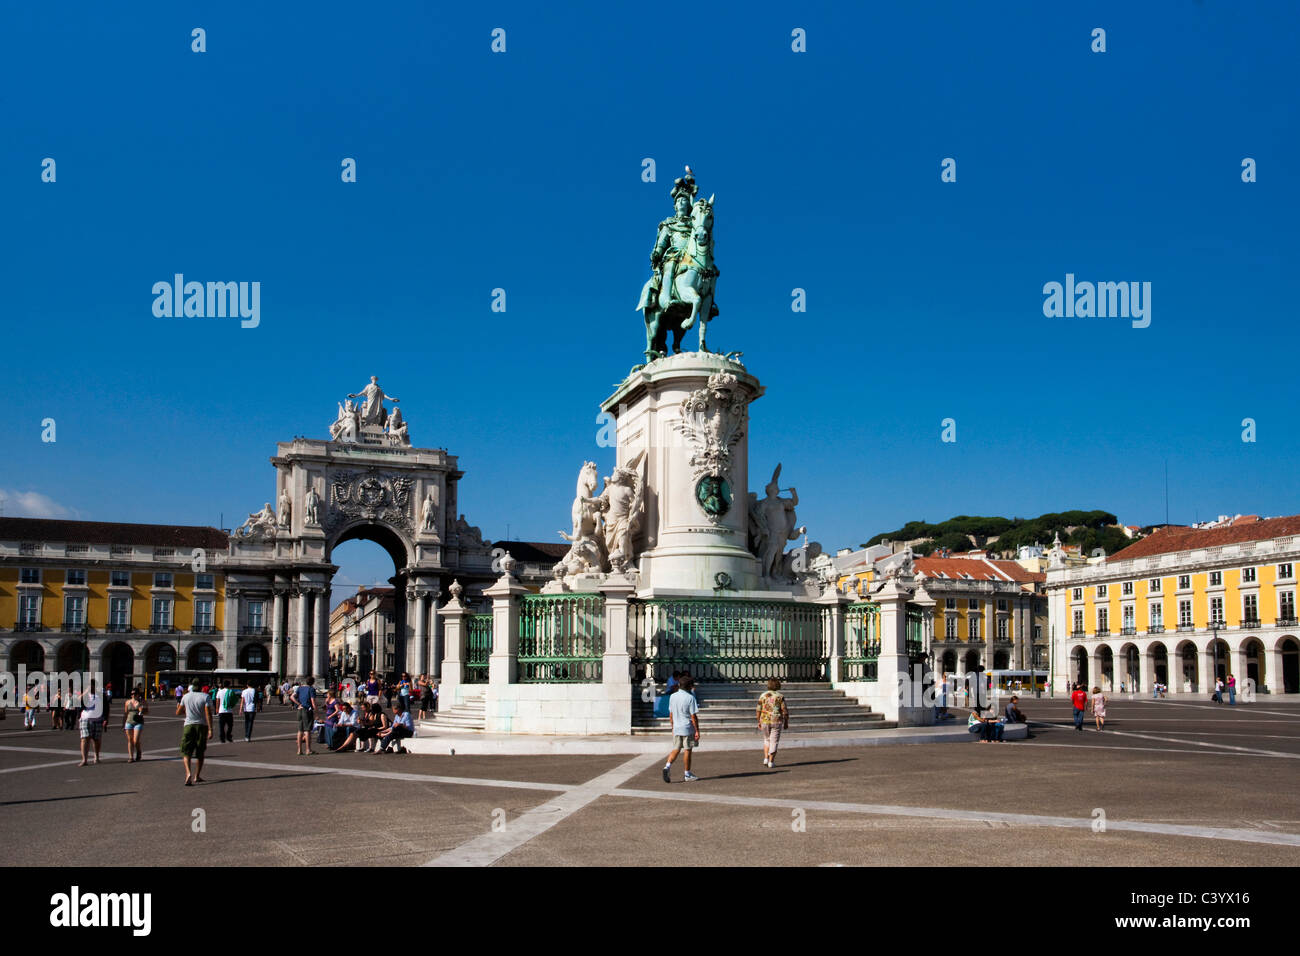 Portugal, Europe, Lisbon, Comerico, archway, monument, Jose I, place, tourism, Stock Photo